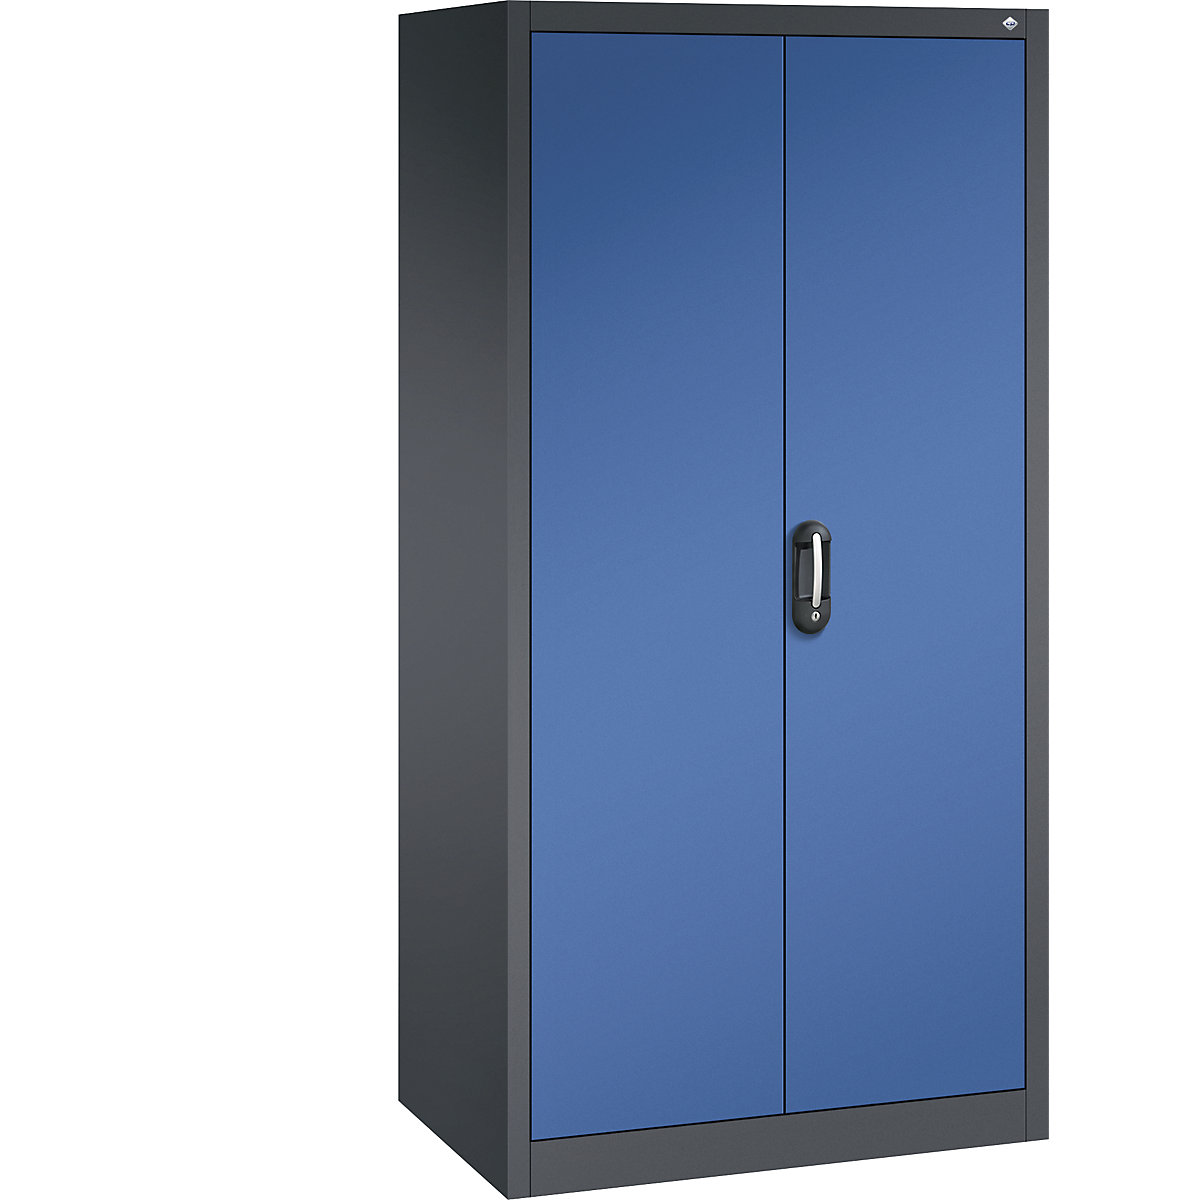 Univerzální skříň ACURADO – C+P, š x h 930 x 600 mm, černošedá / enciánová modrá-22